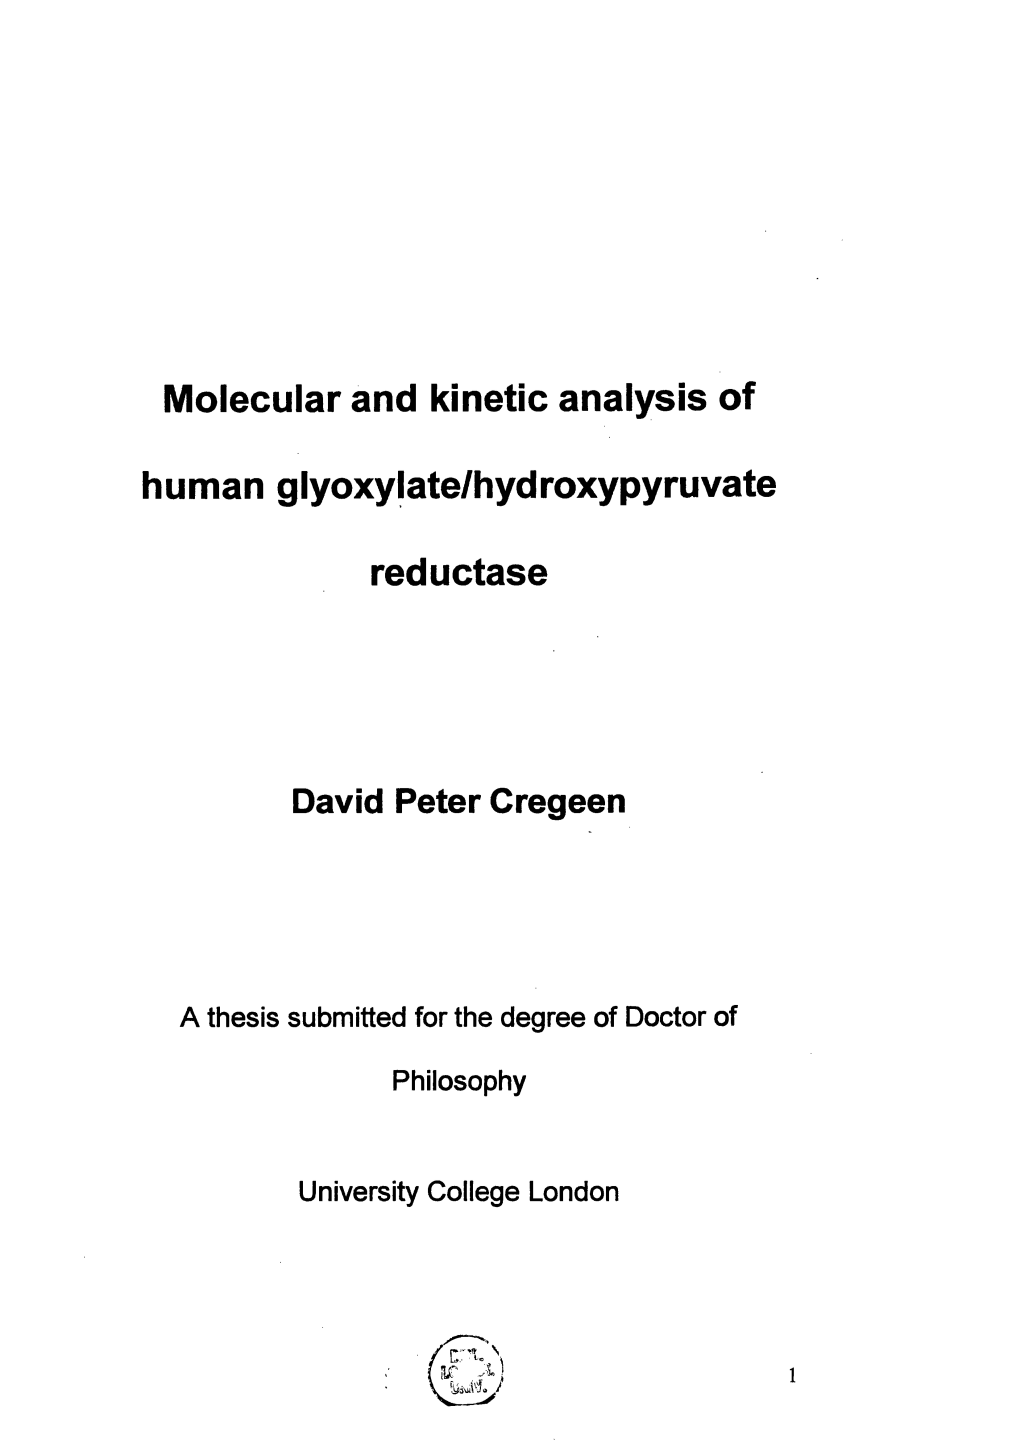 Molecular and Kinetic Analysis of Human Glyoxylate/Hydroxypyruvate